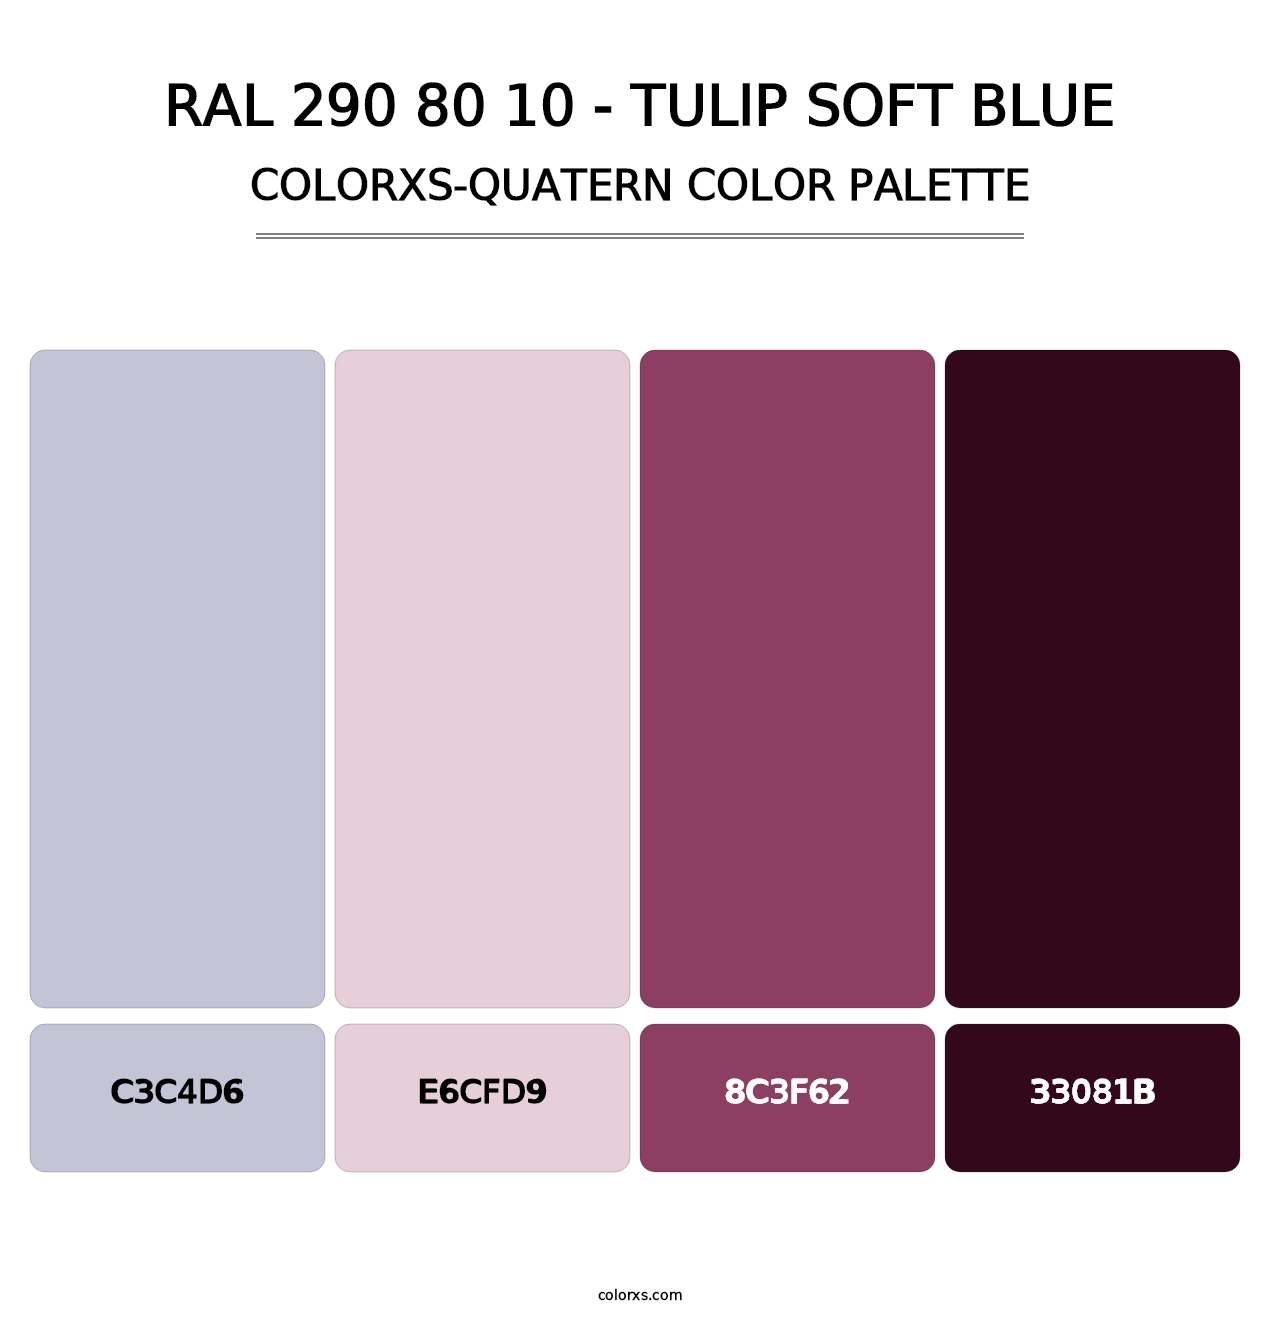 RAL 290 80 10 - Tulip Soft Blue - Colorxs Quatern Palette